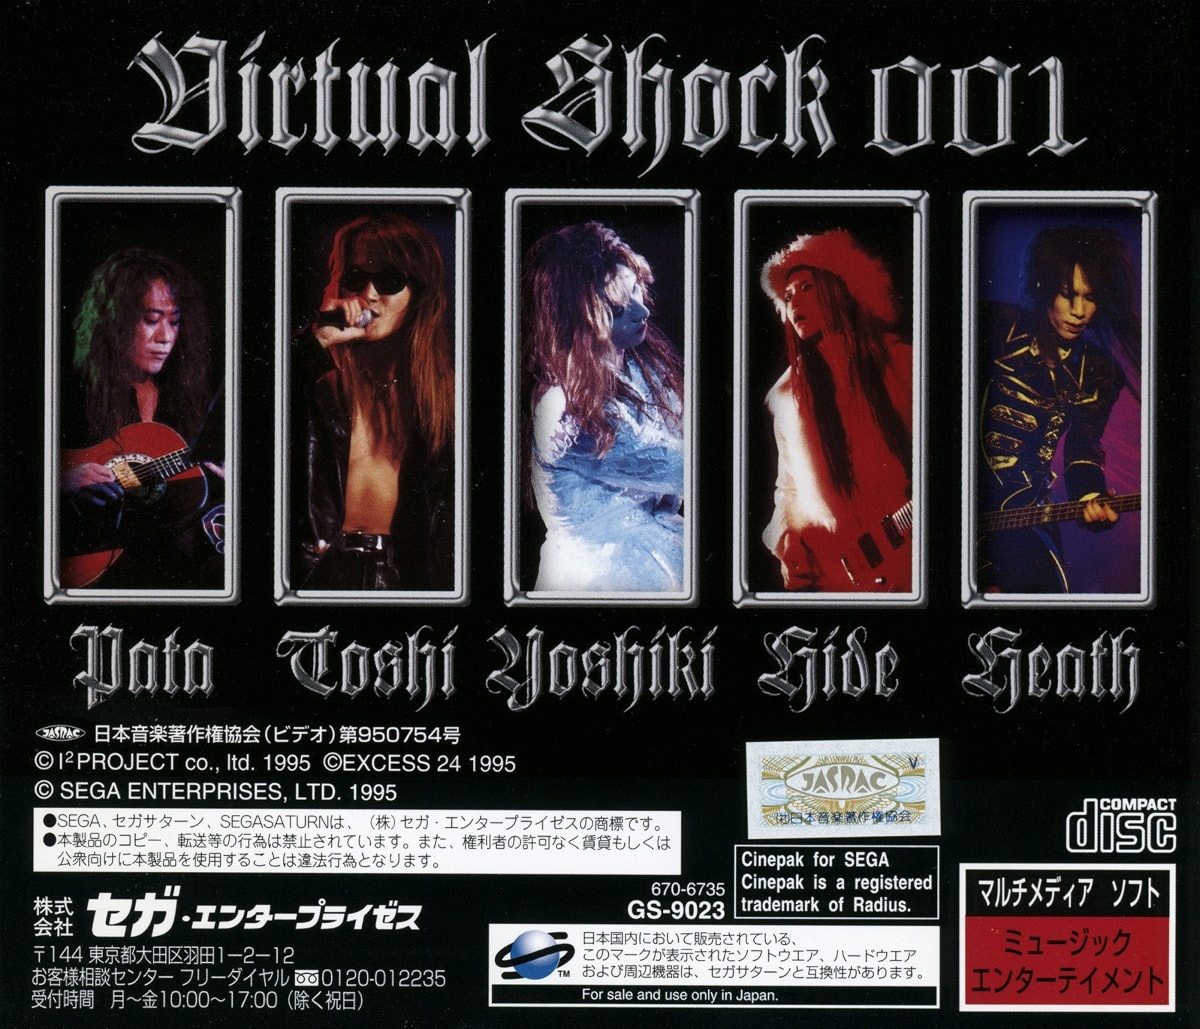 X Japan Virtual Shock 001 cover